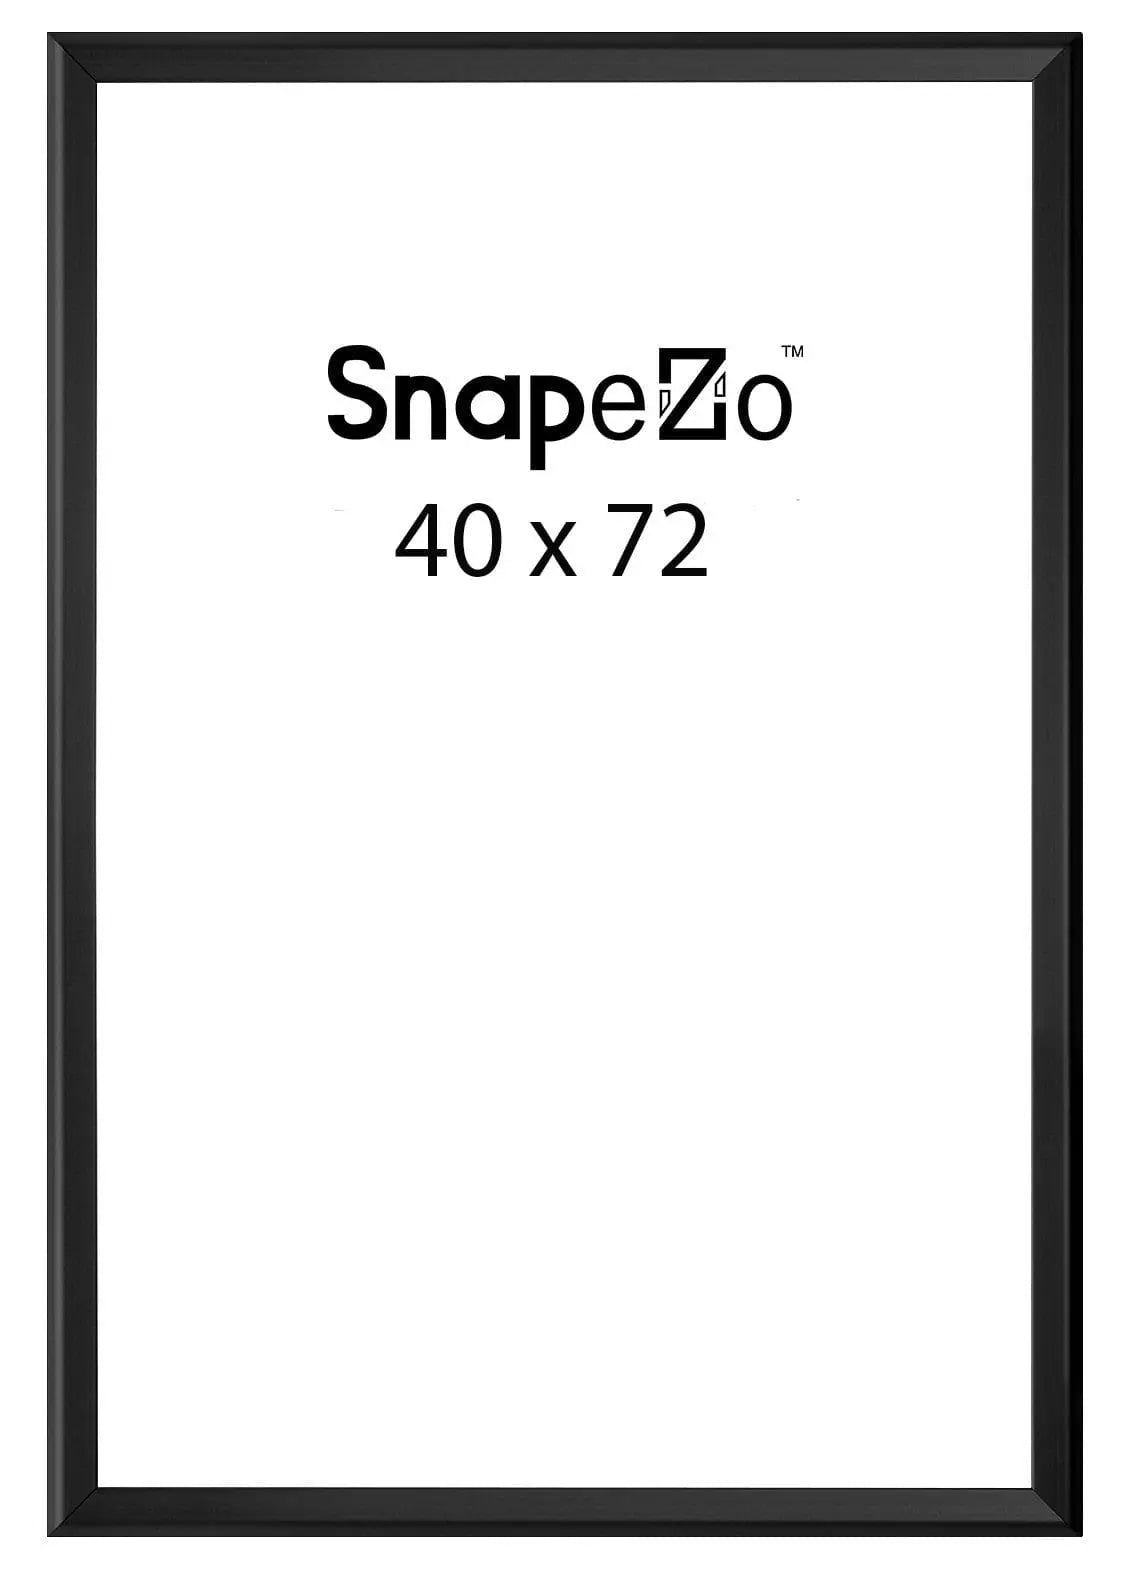 Black snap frame poster size 40x72 - 1.7 inch profile - Snap Frames Direct